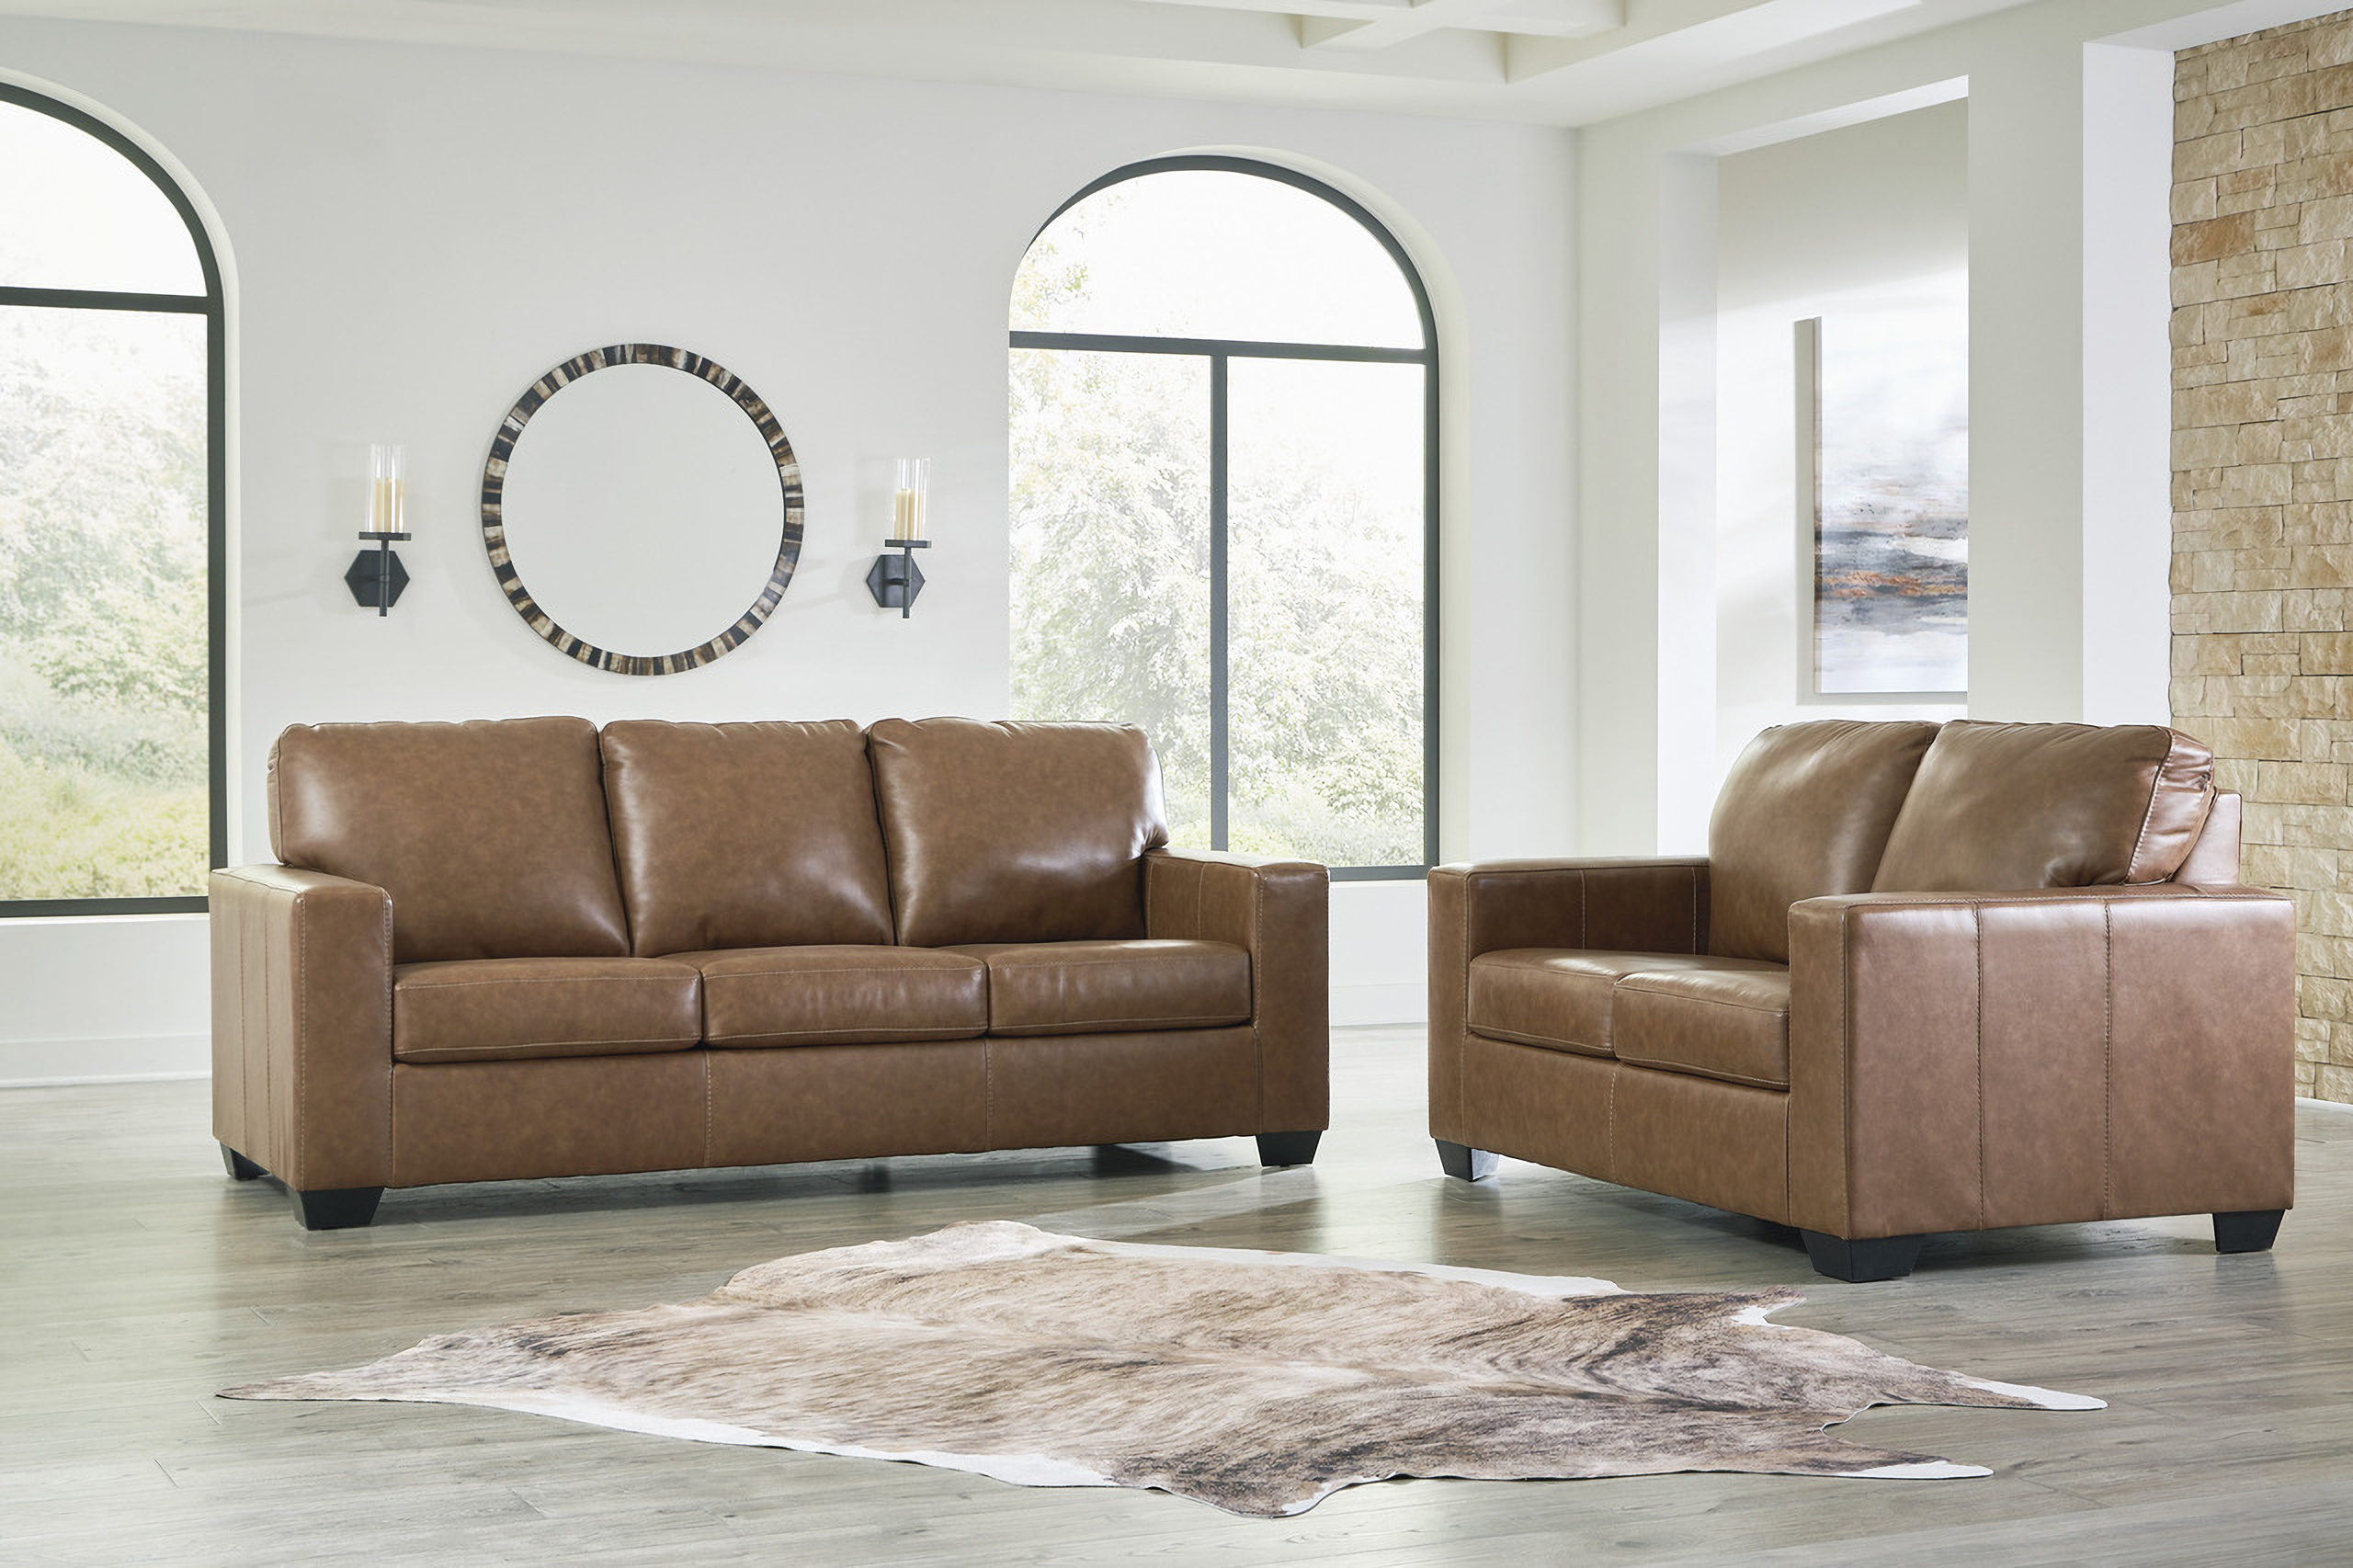 Furniture Bolsena | Set In Room Caramel by 1StopBedrooms Ashley Living